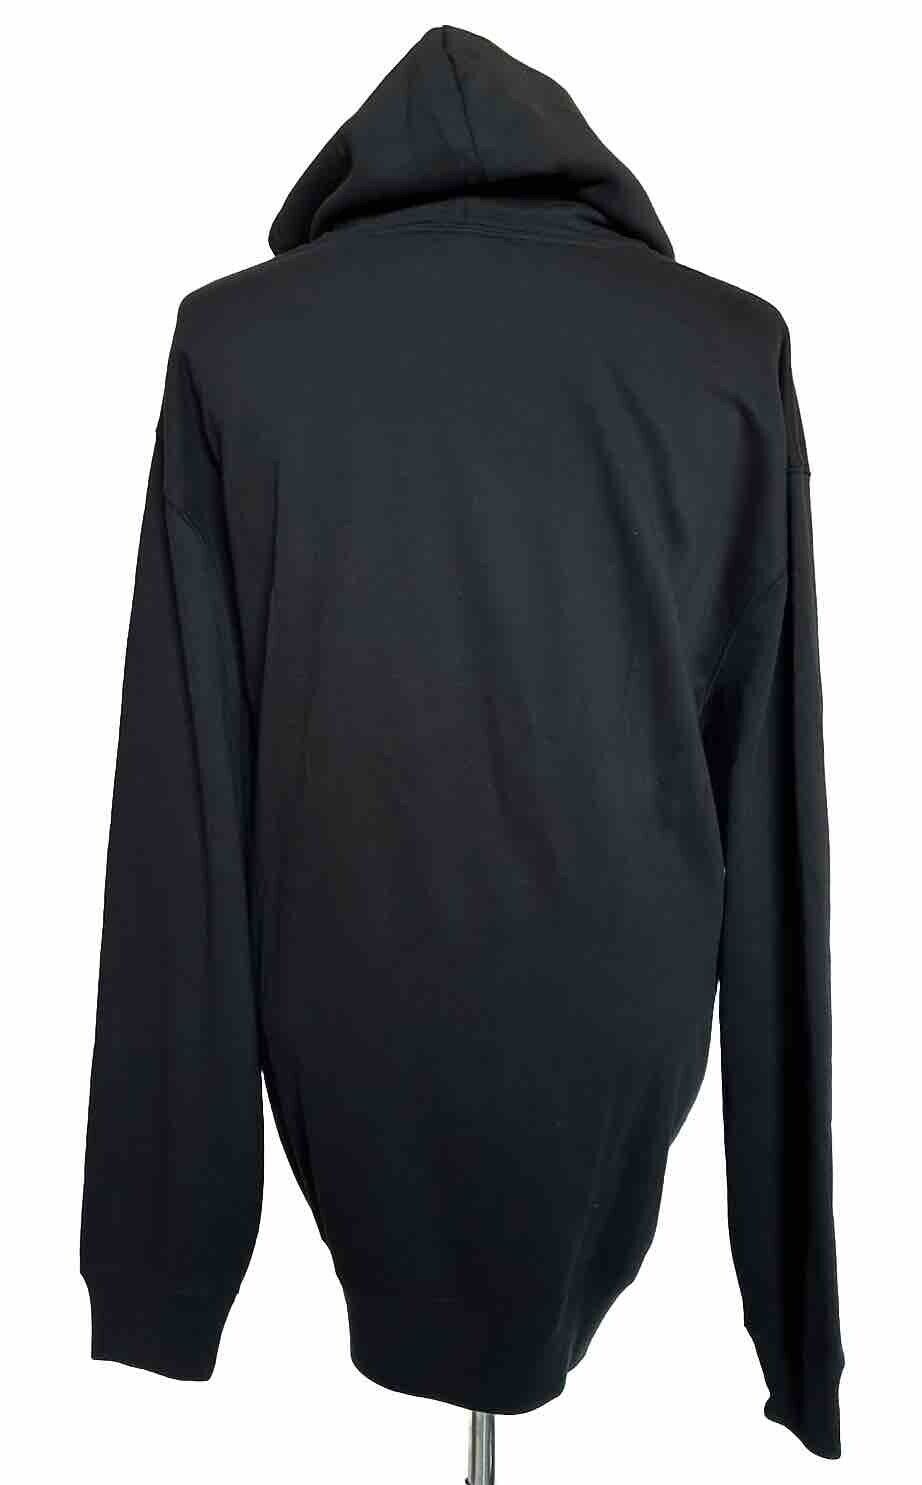 NWT $188 Polo Ralph Lauren Holiday Bear Sweatshirt with Hoodie Black 2XLT/2TGL